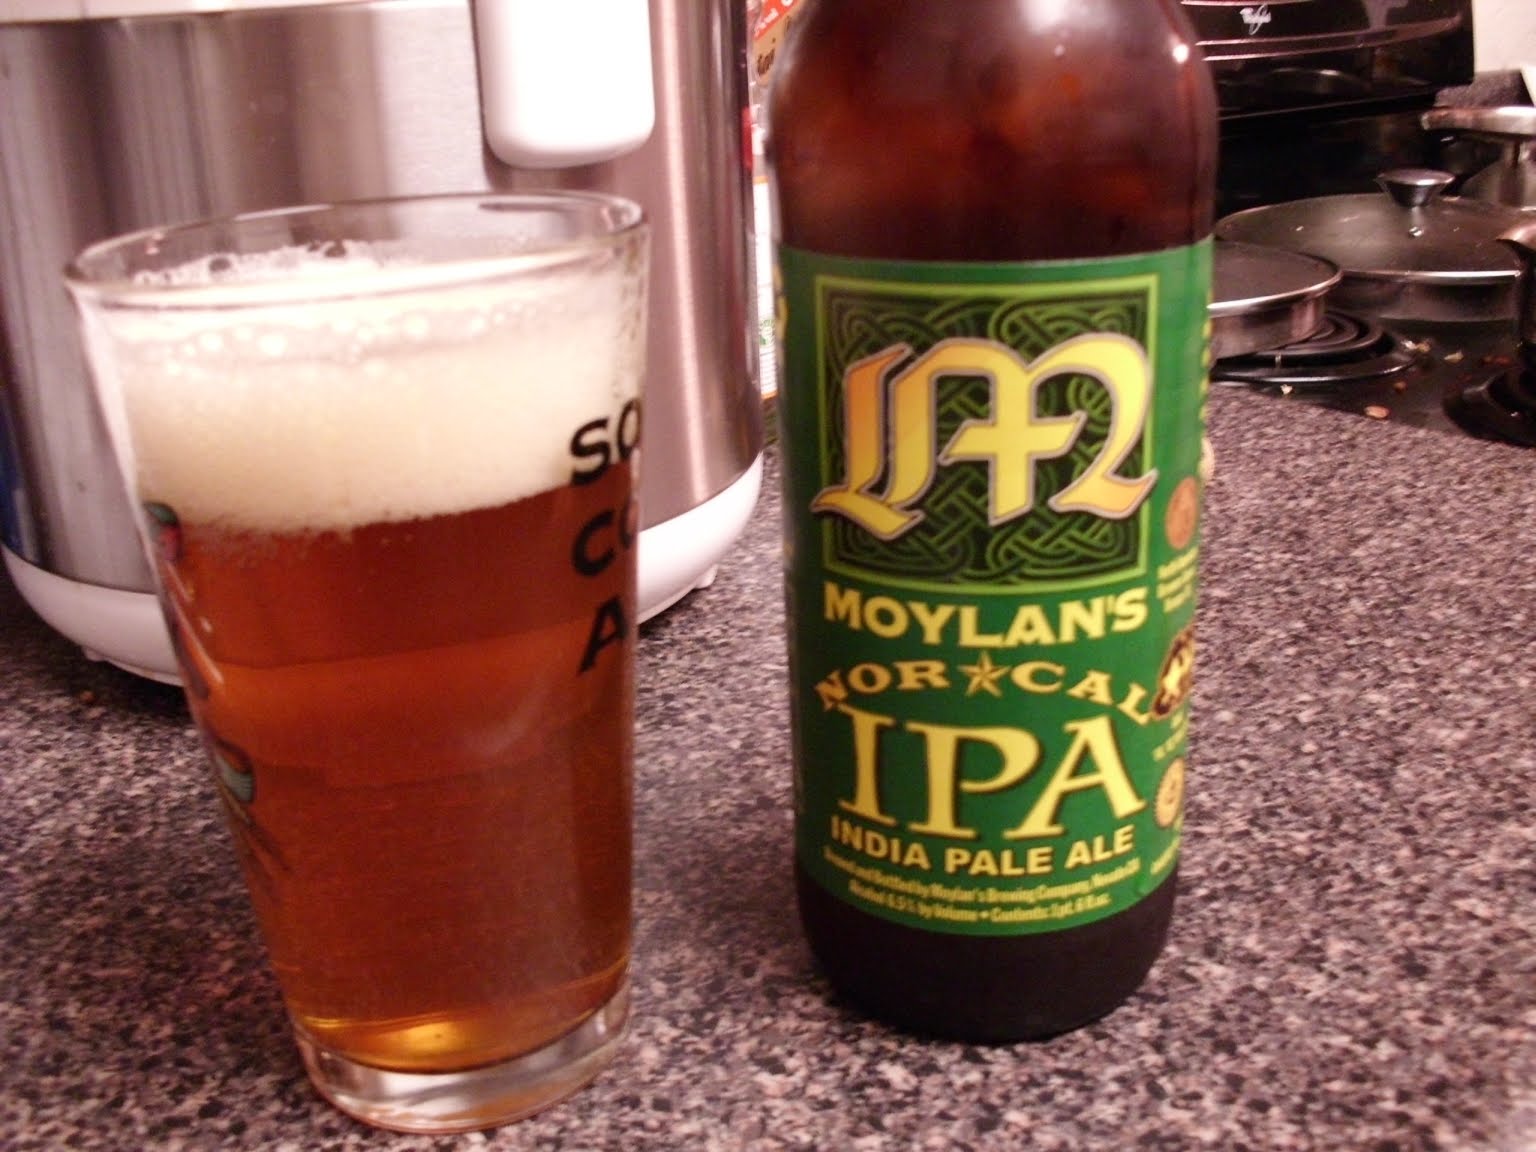 beer+-+moylans+norcal+ipa.JPG